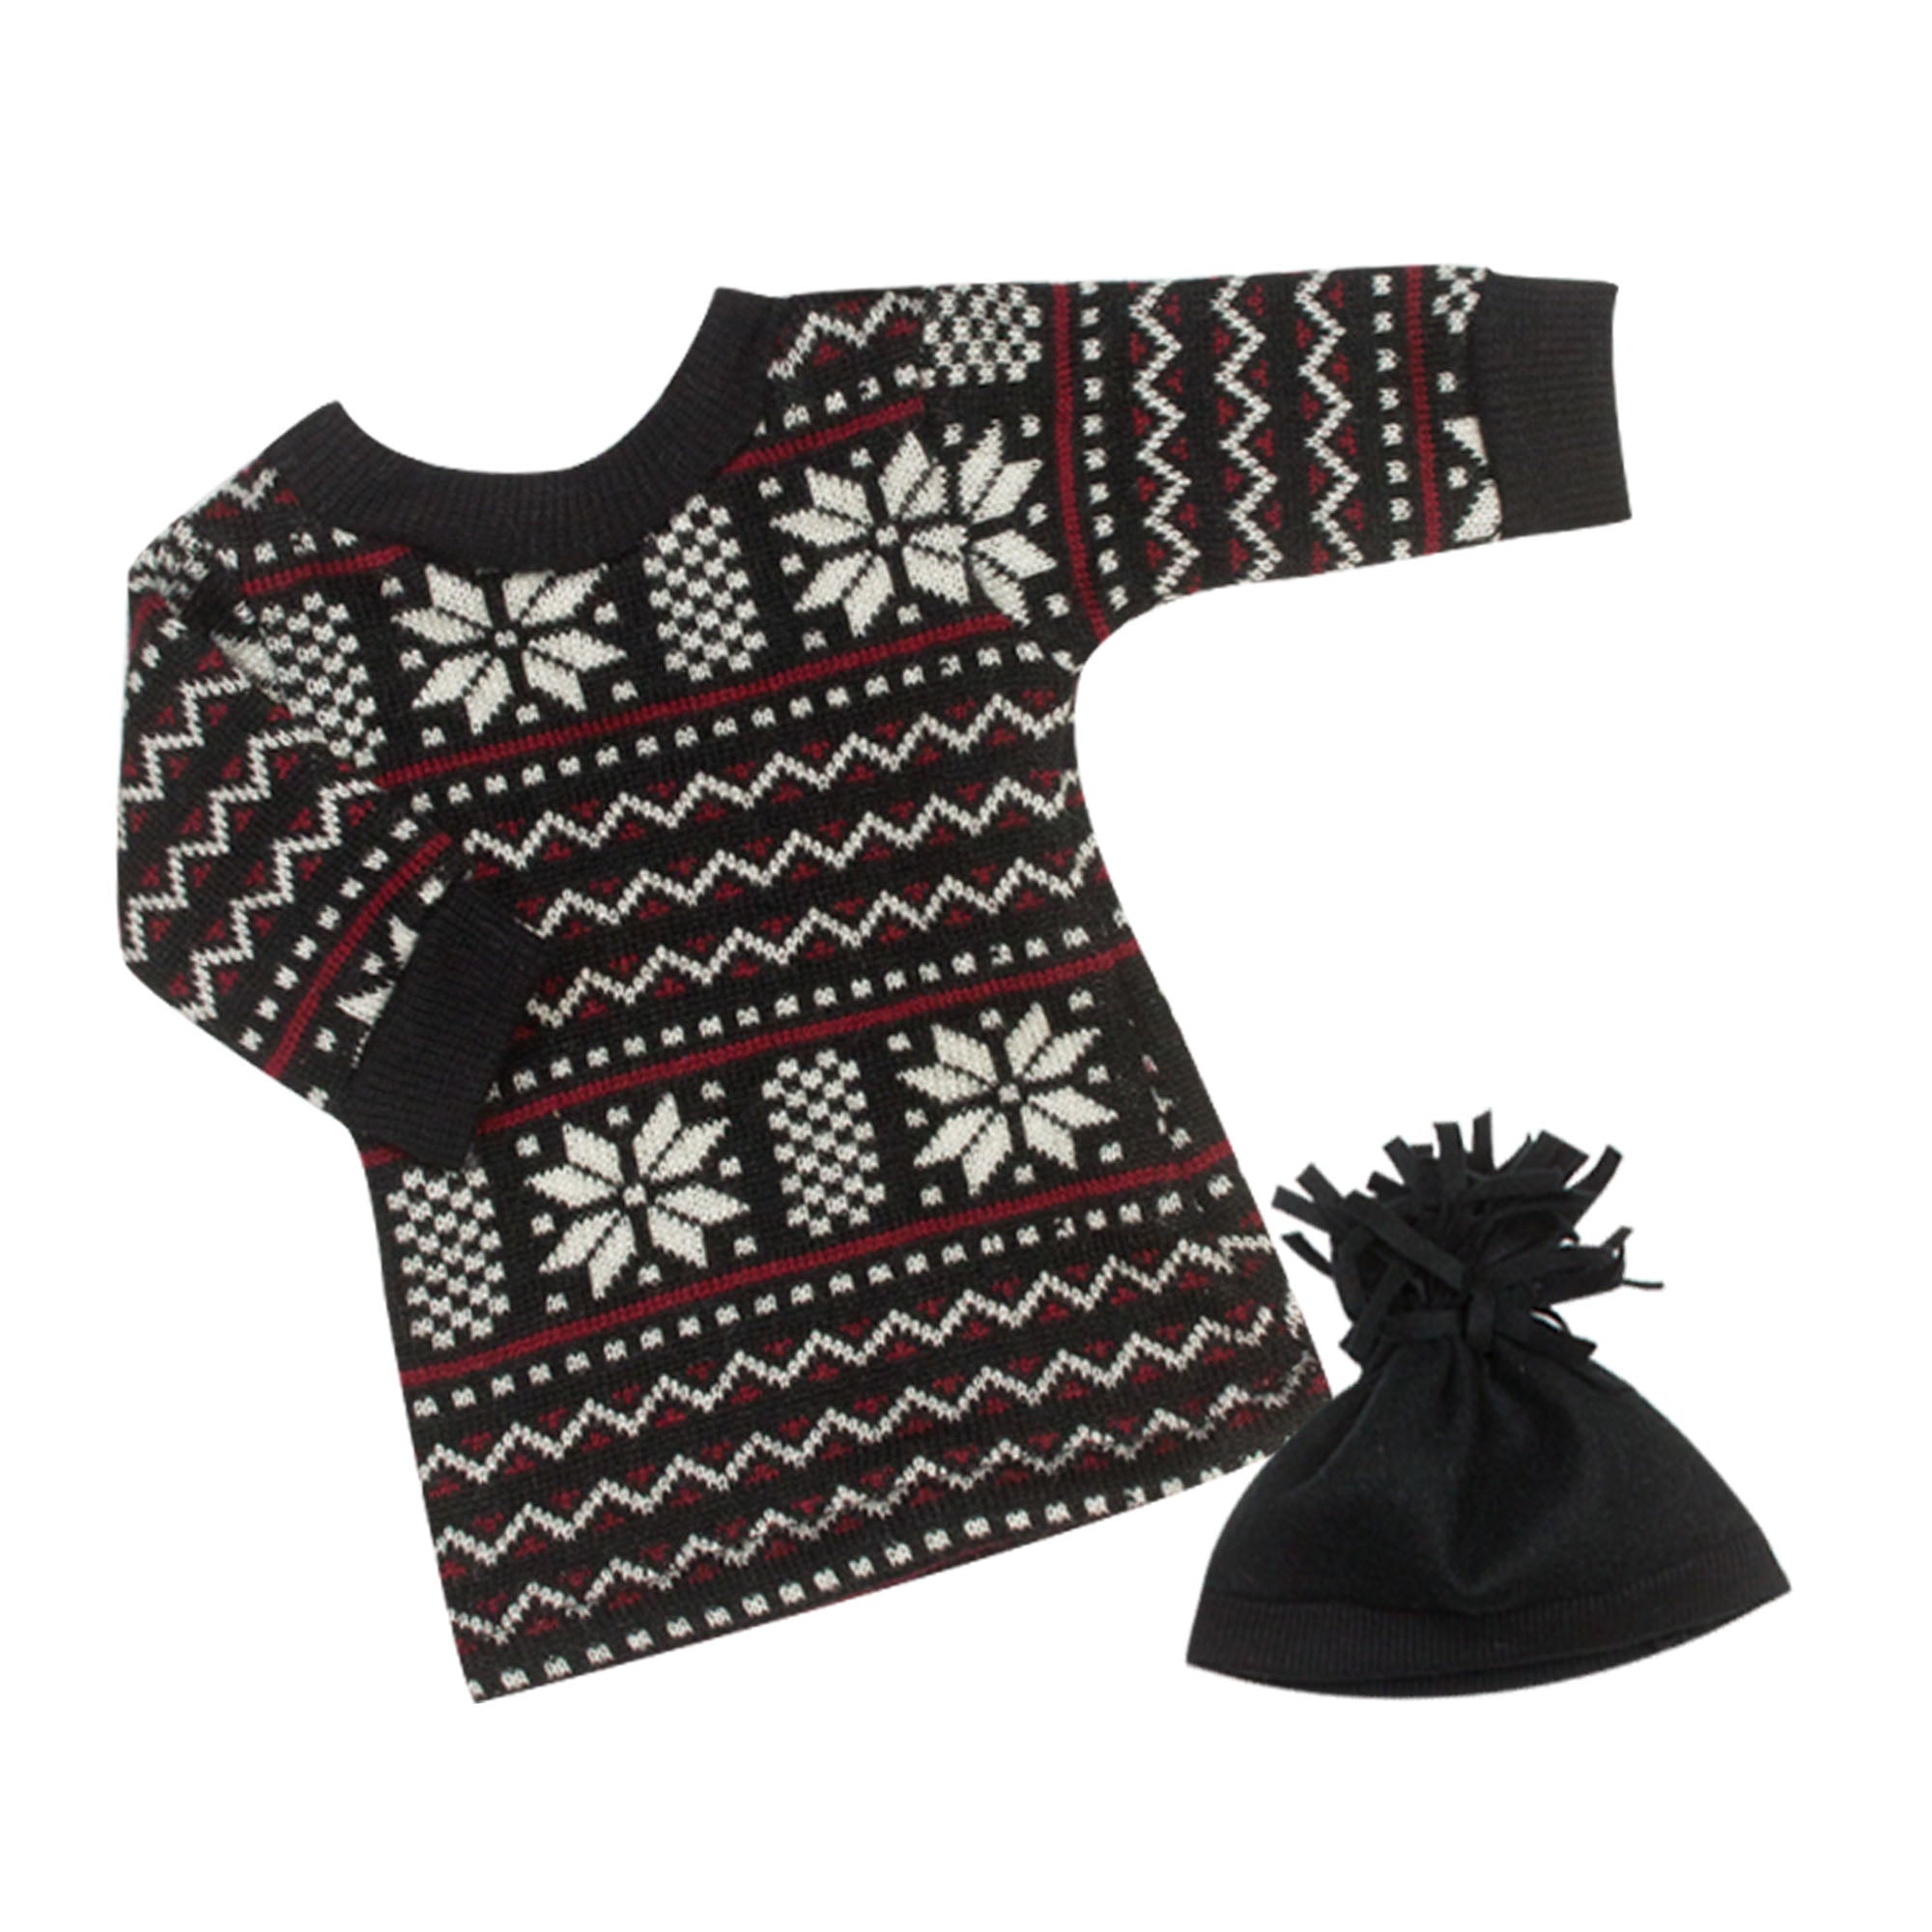 Sophia's Fair Isle Sweater Dress and Hat for 18" Dolls, Black